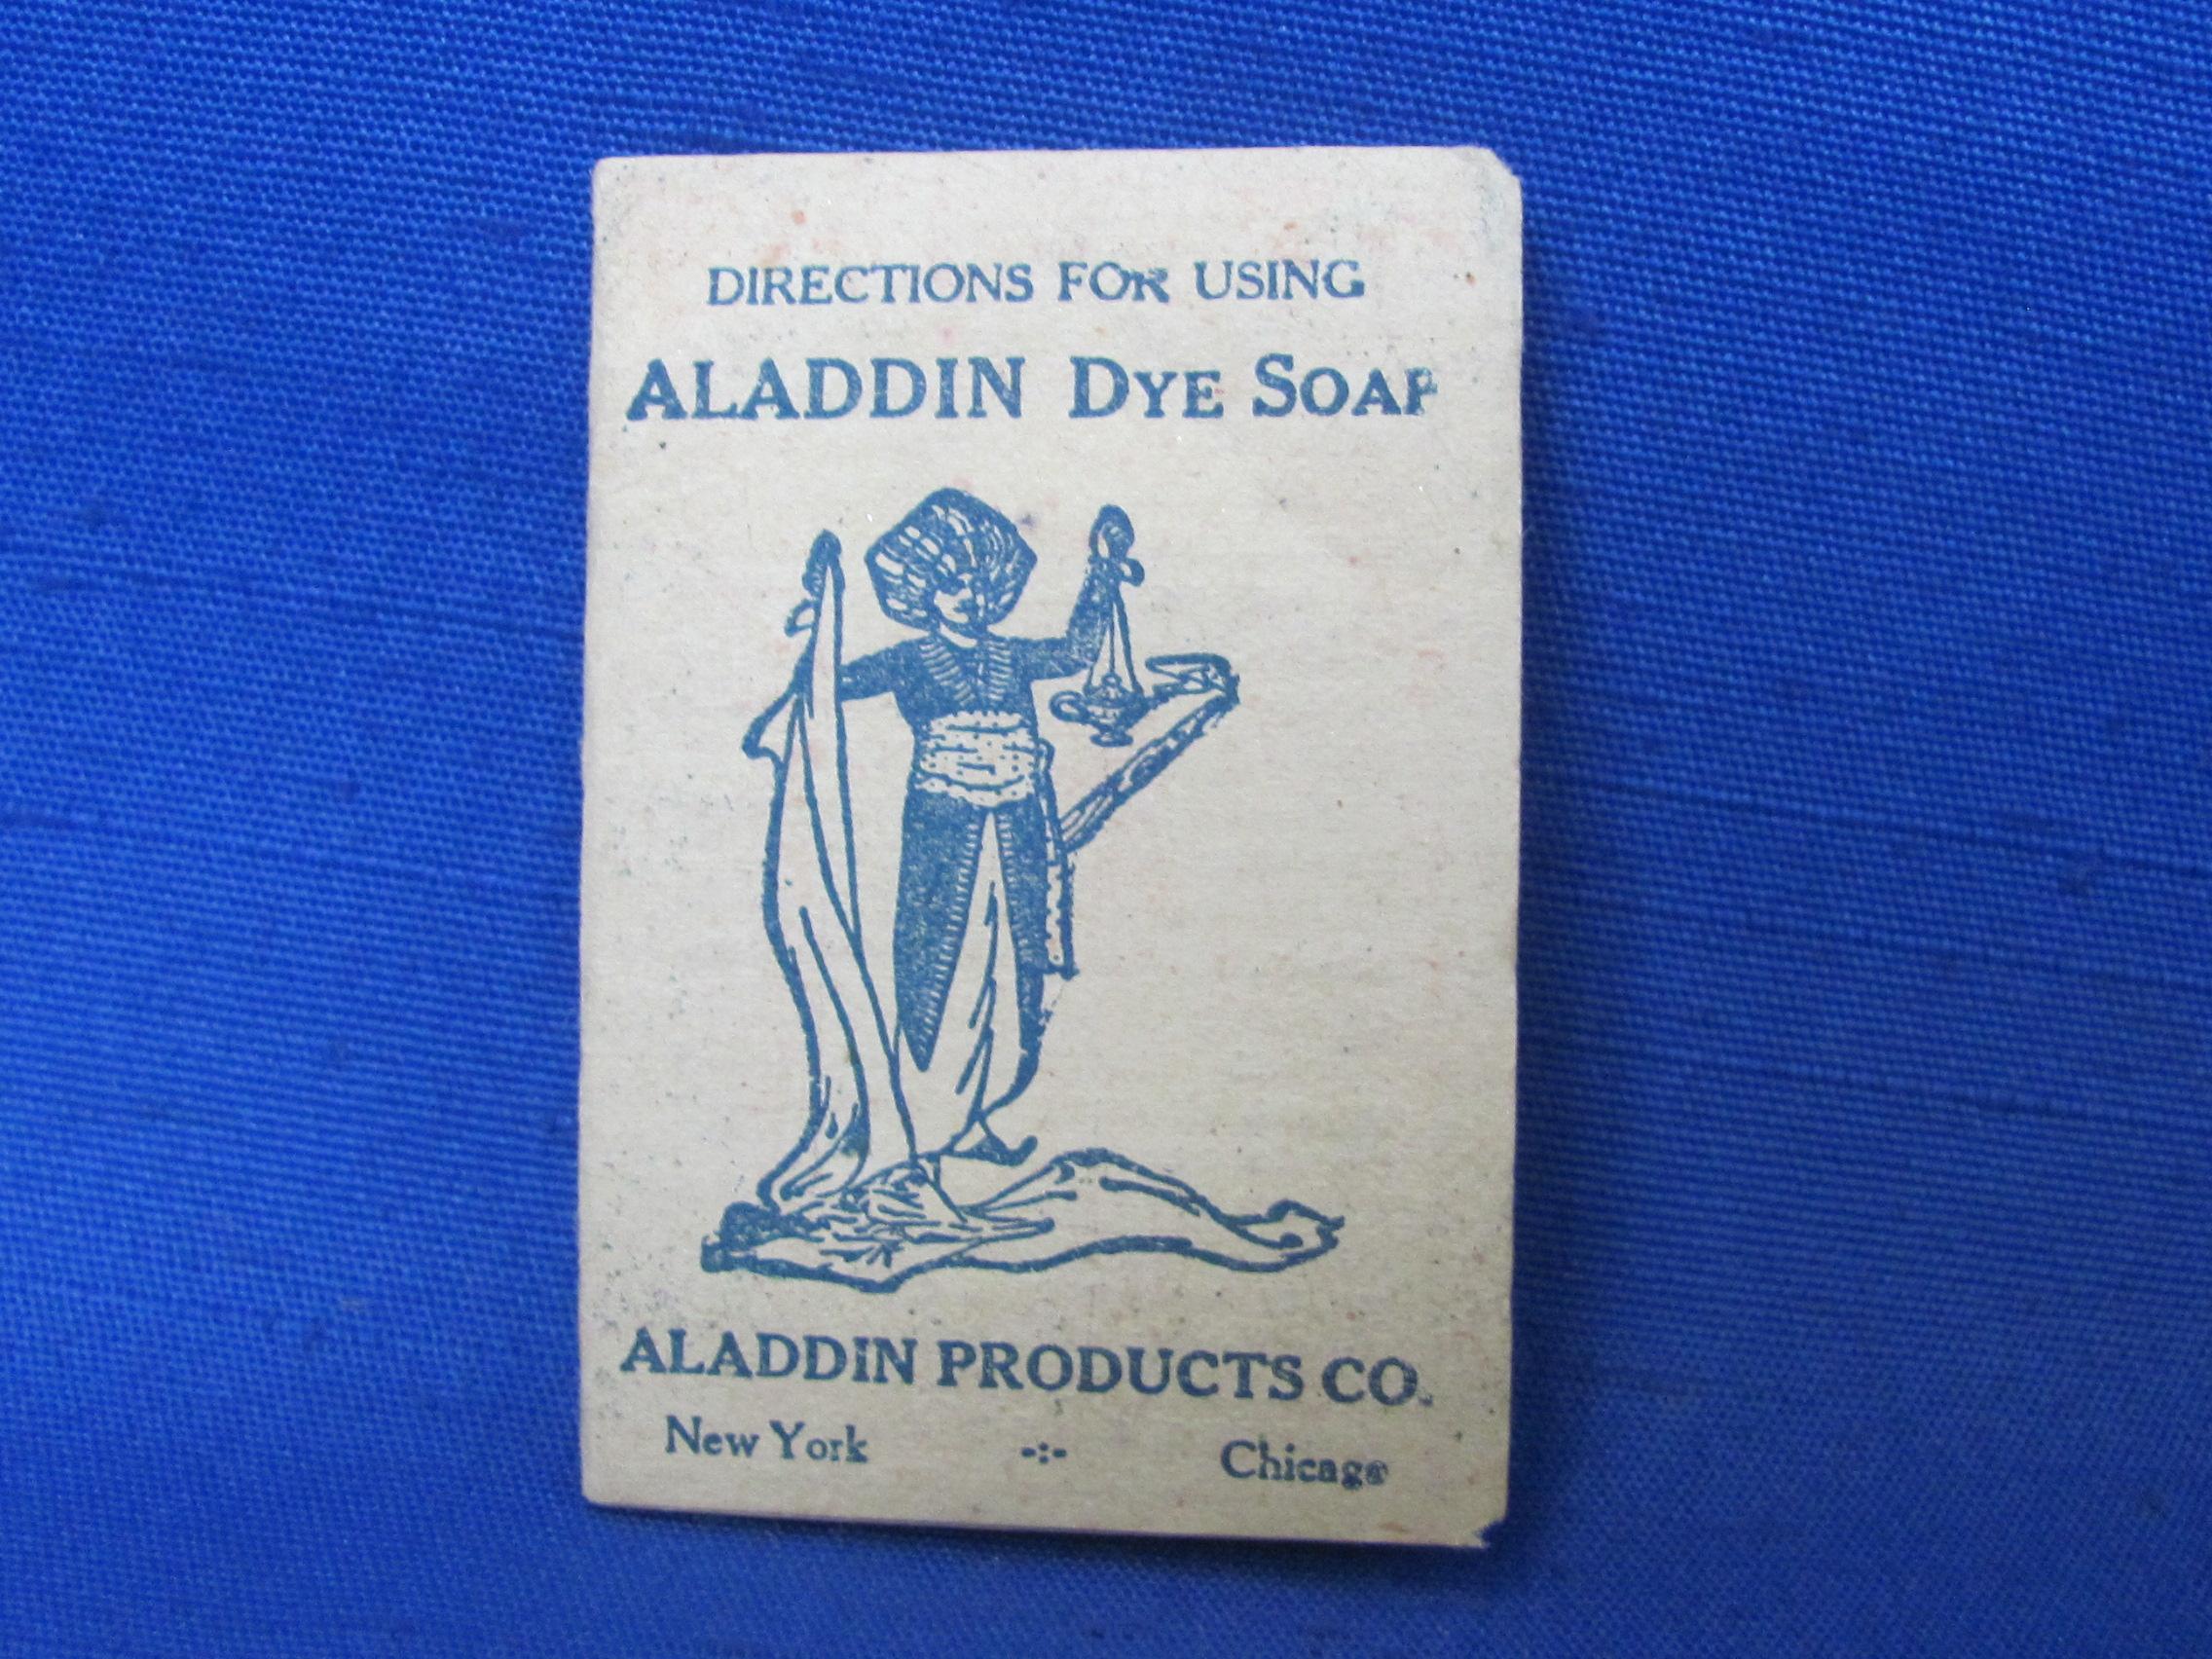 Vintage Advertising: Cinderella & Aladdin Dye Soaps – Angel Dainty Dyes Packet